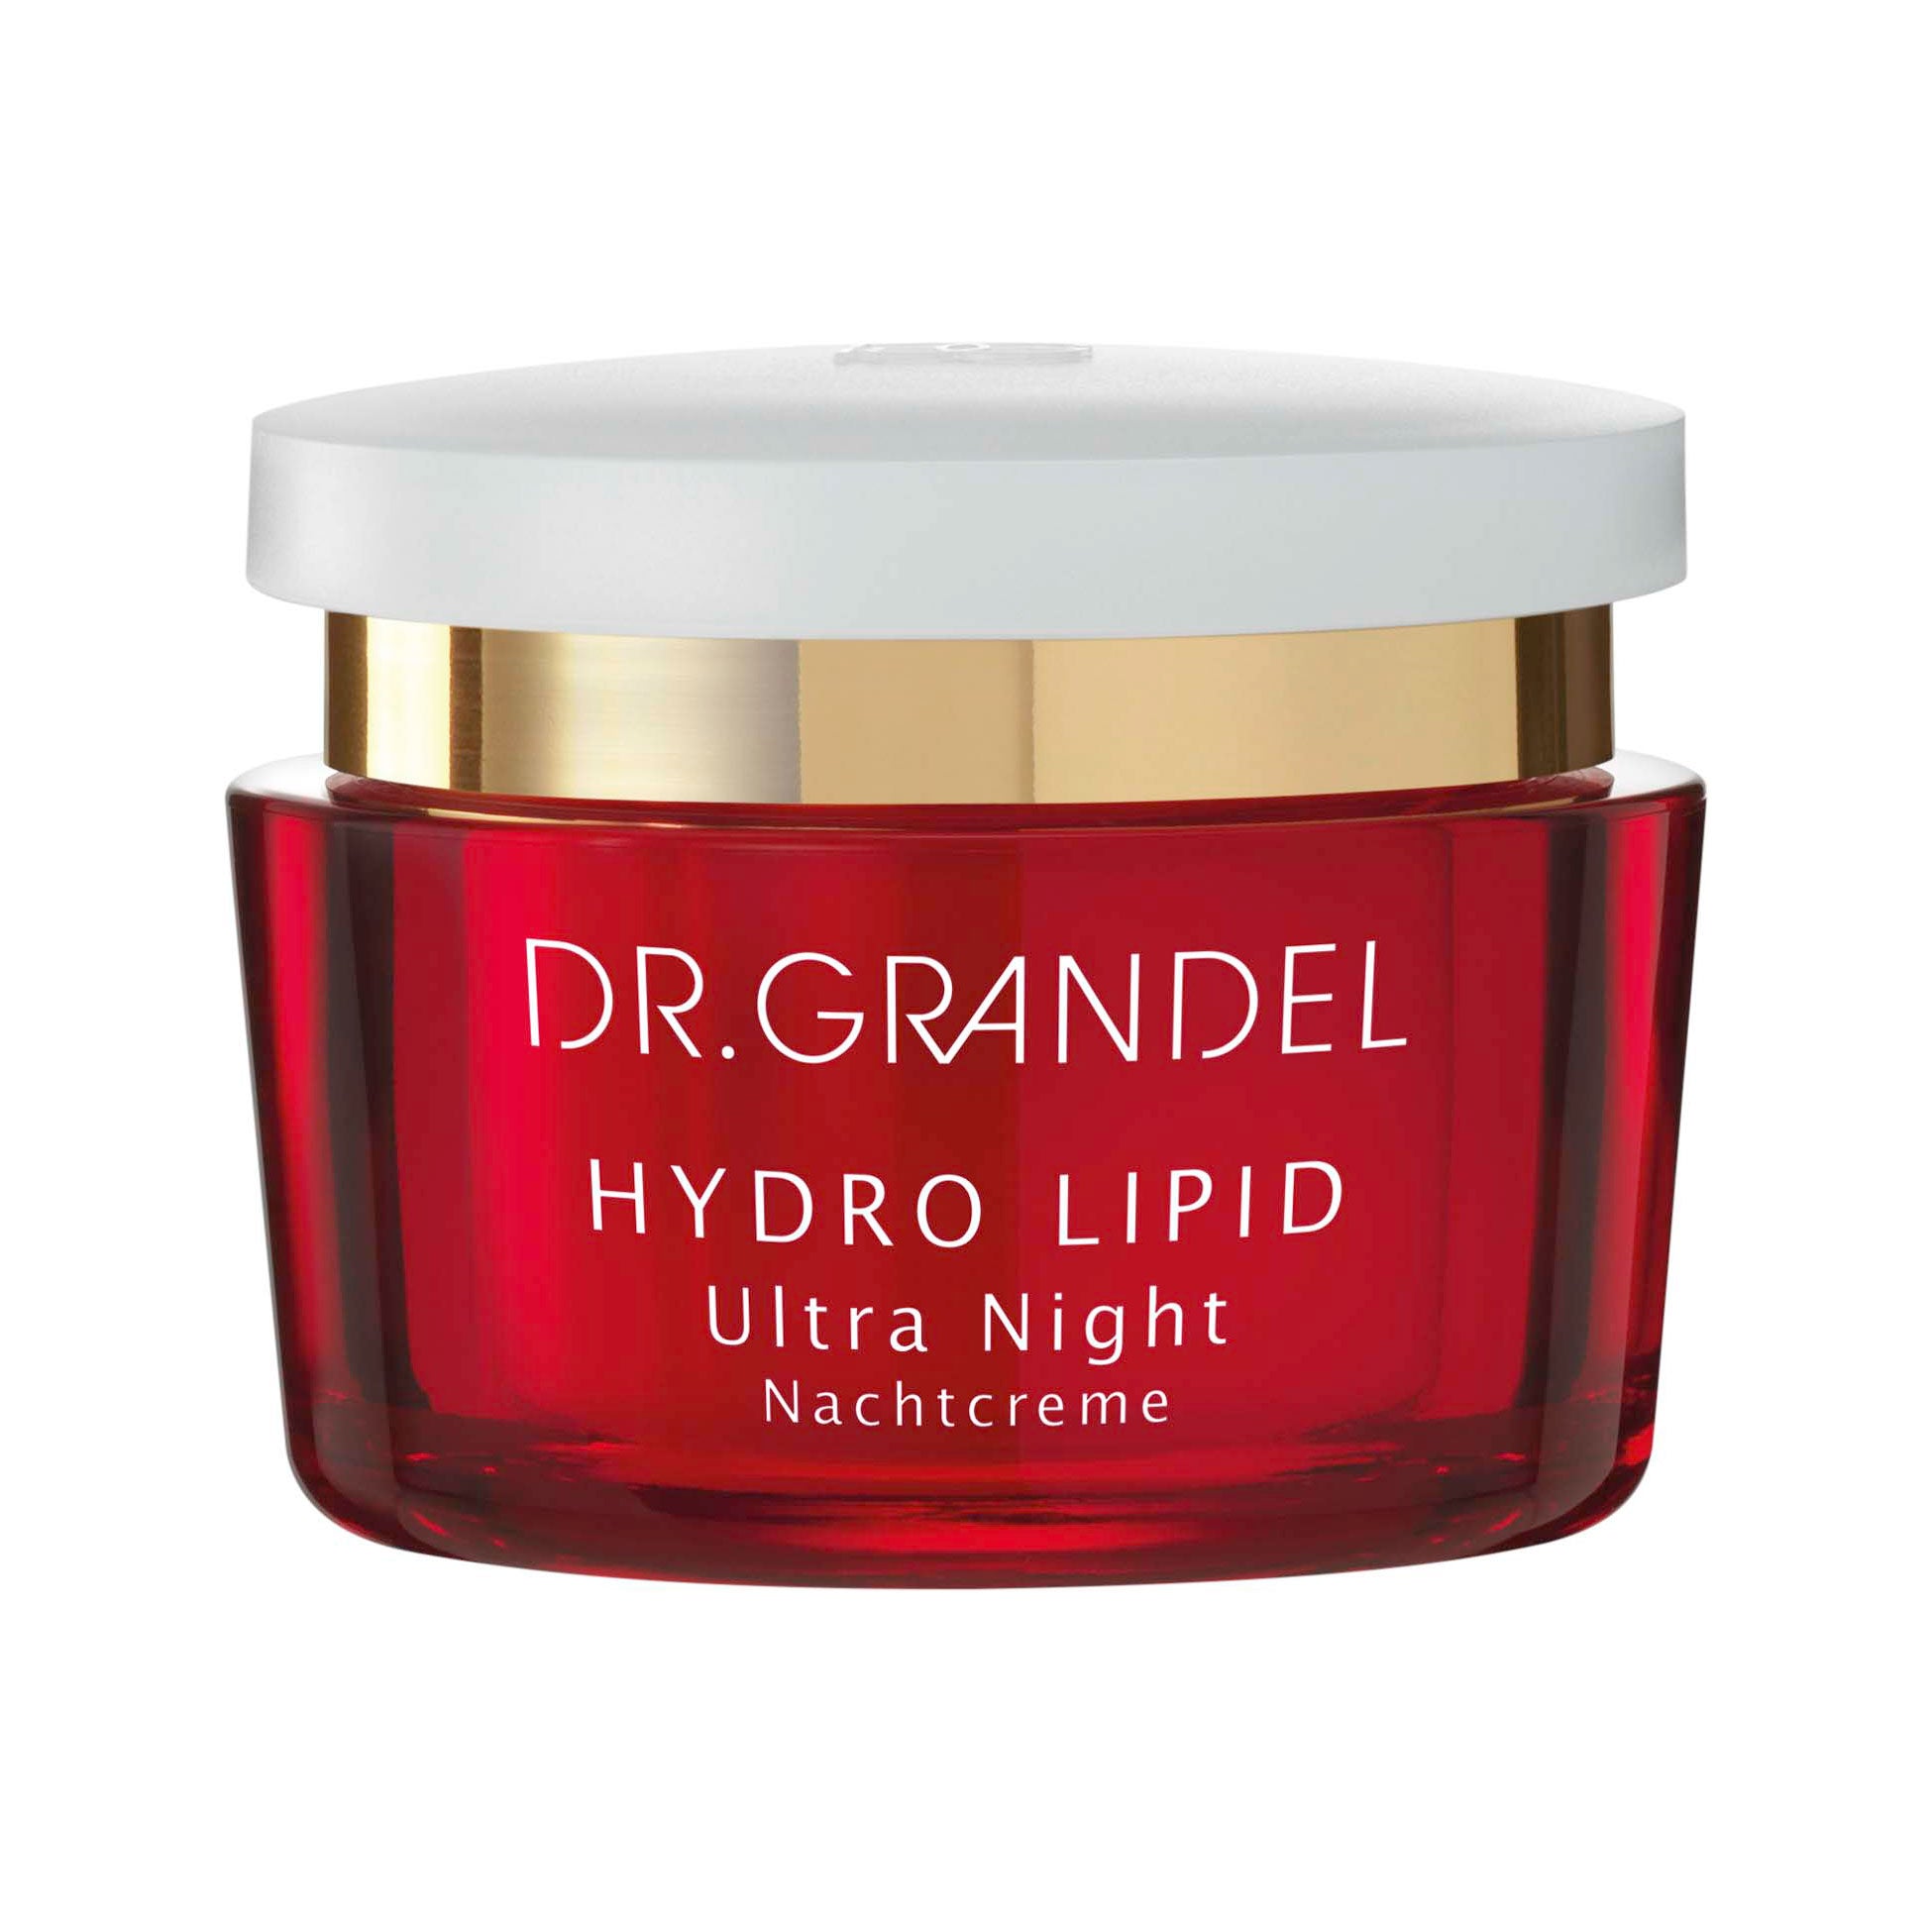 Dr. Grandel Hydro Lipid Ultra Night